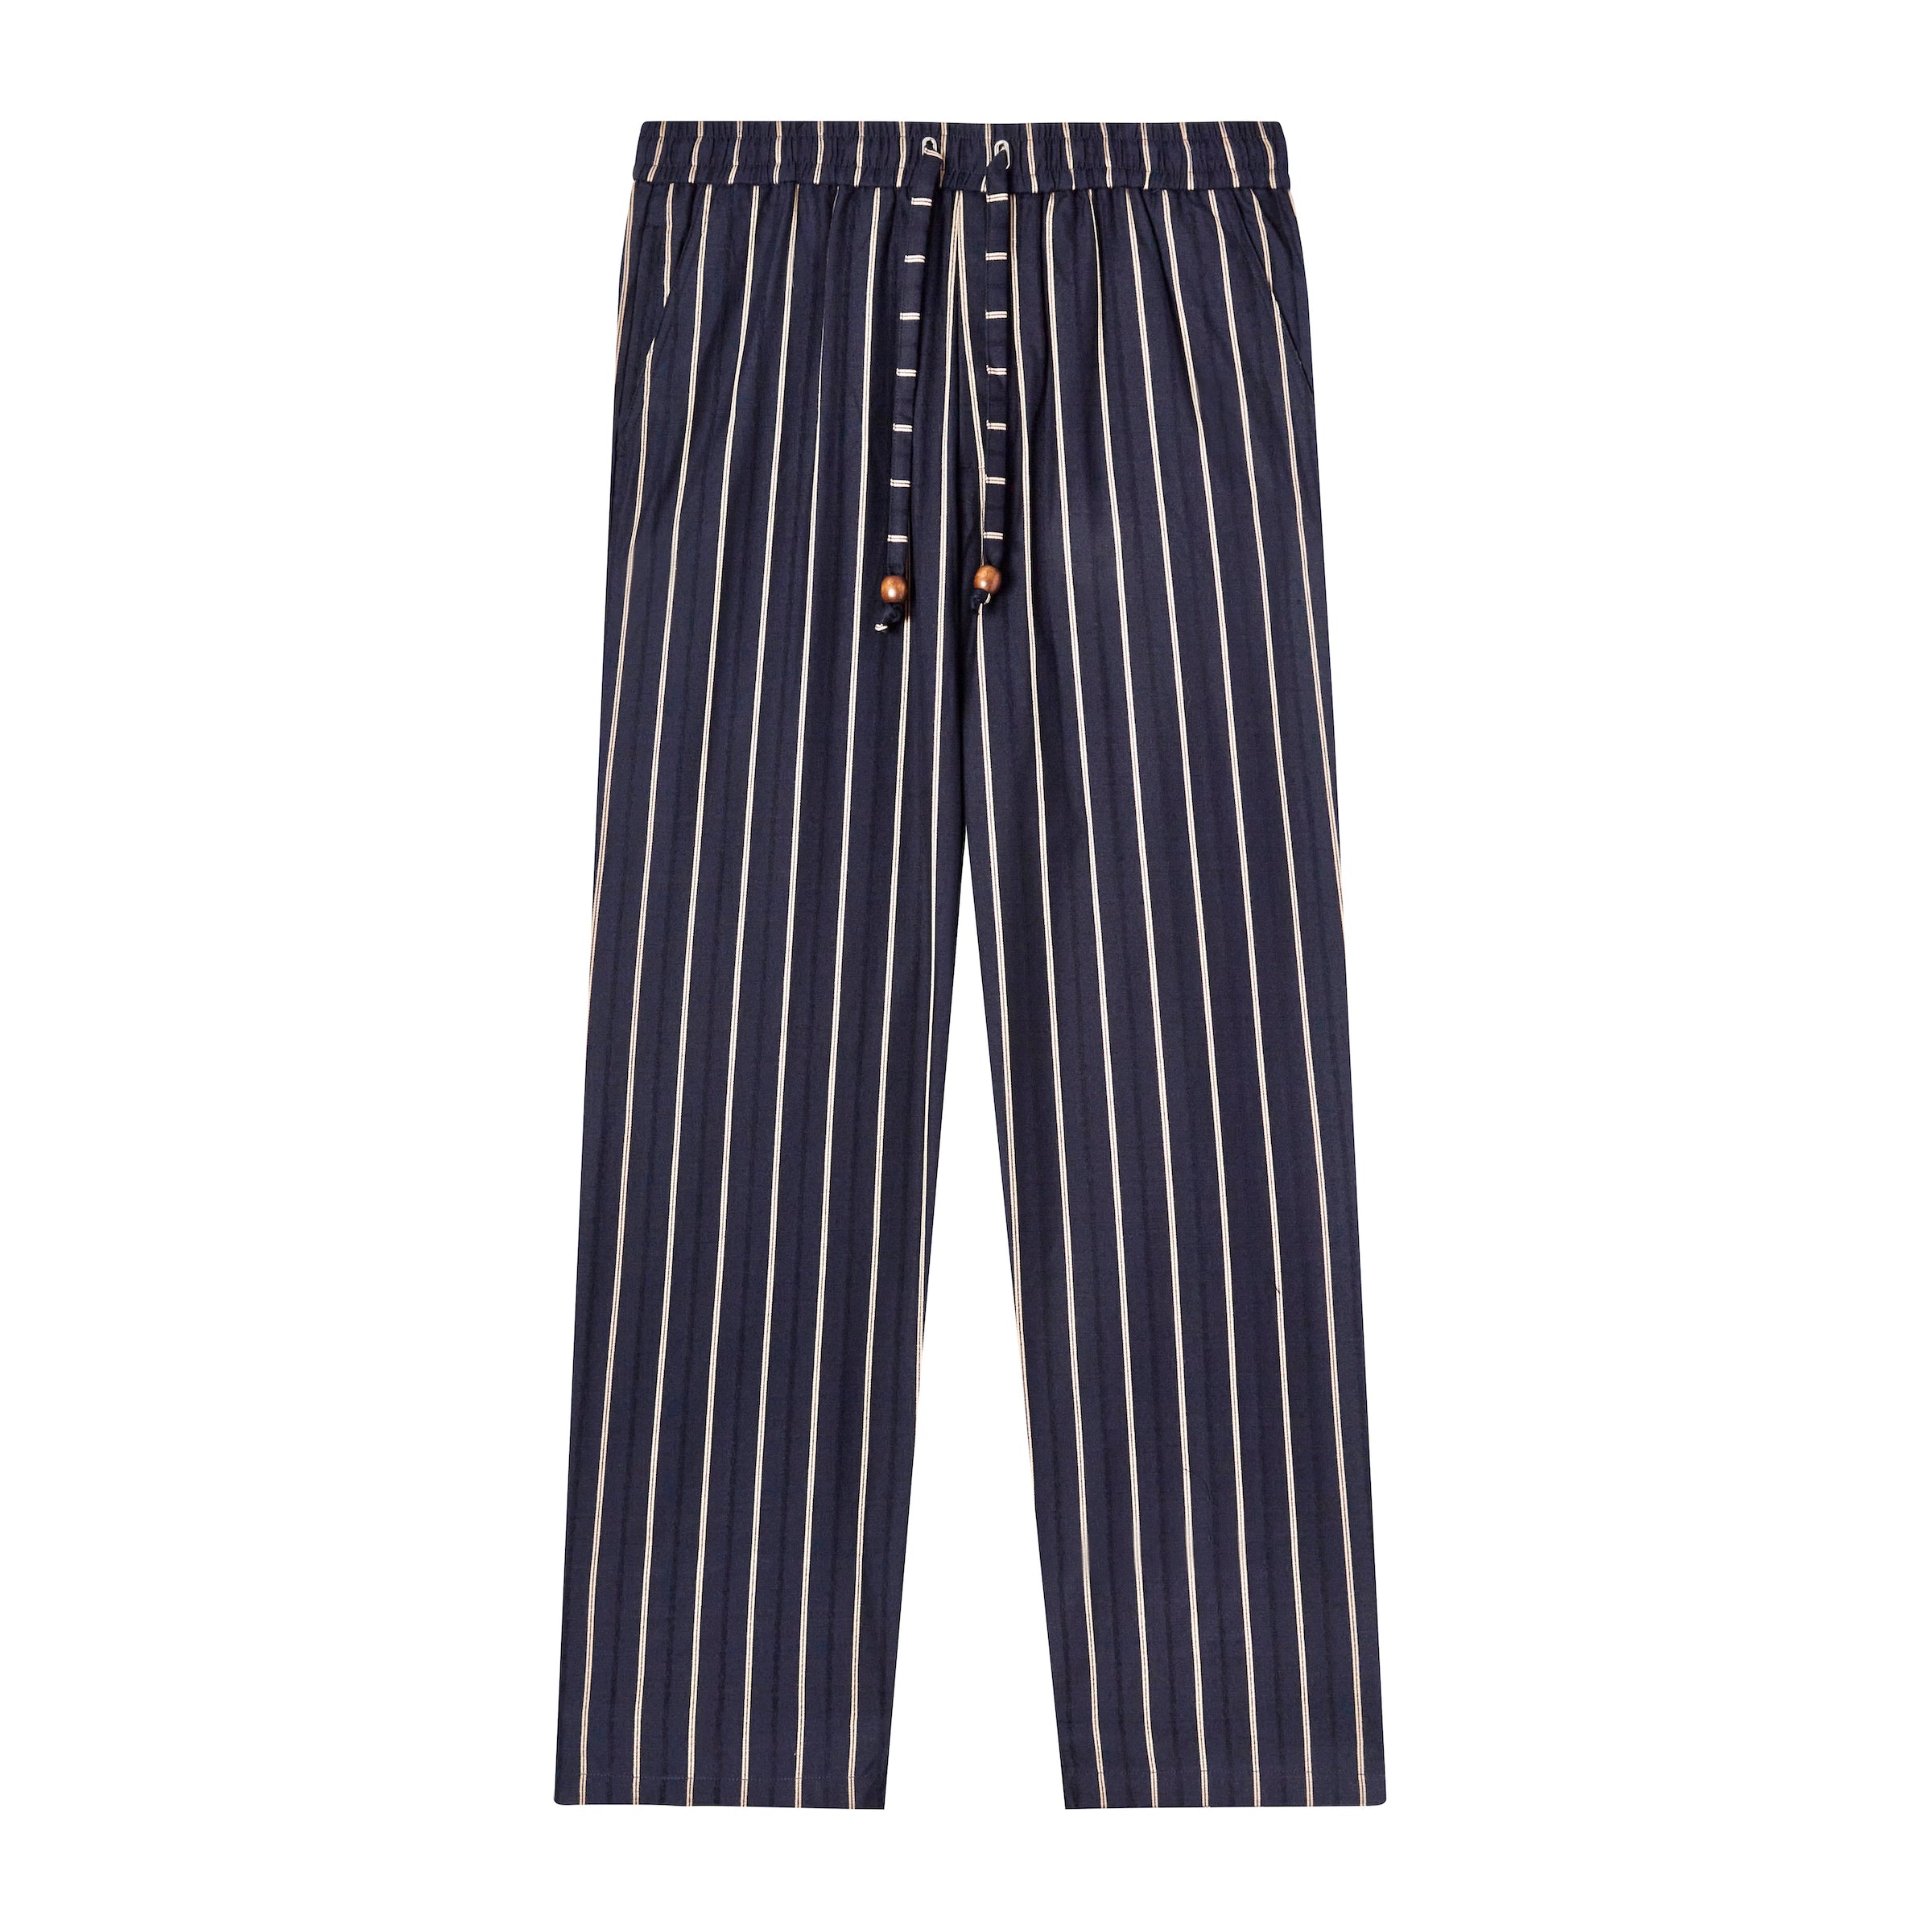 Easy-Going Pants (Navy Jacquard Stripe)